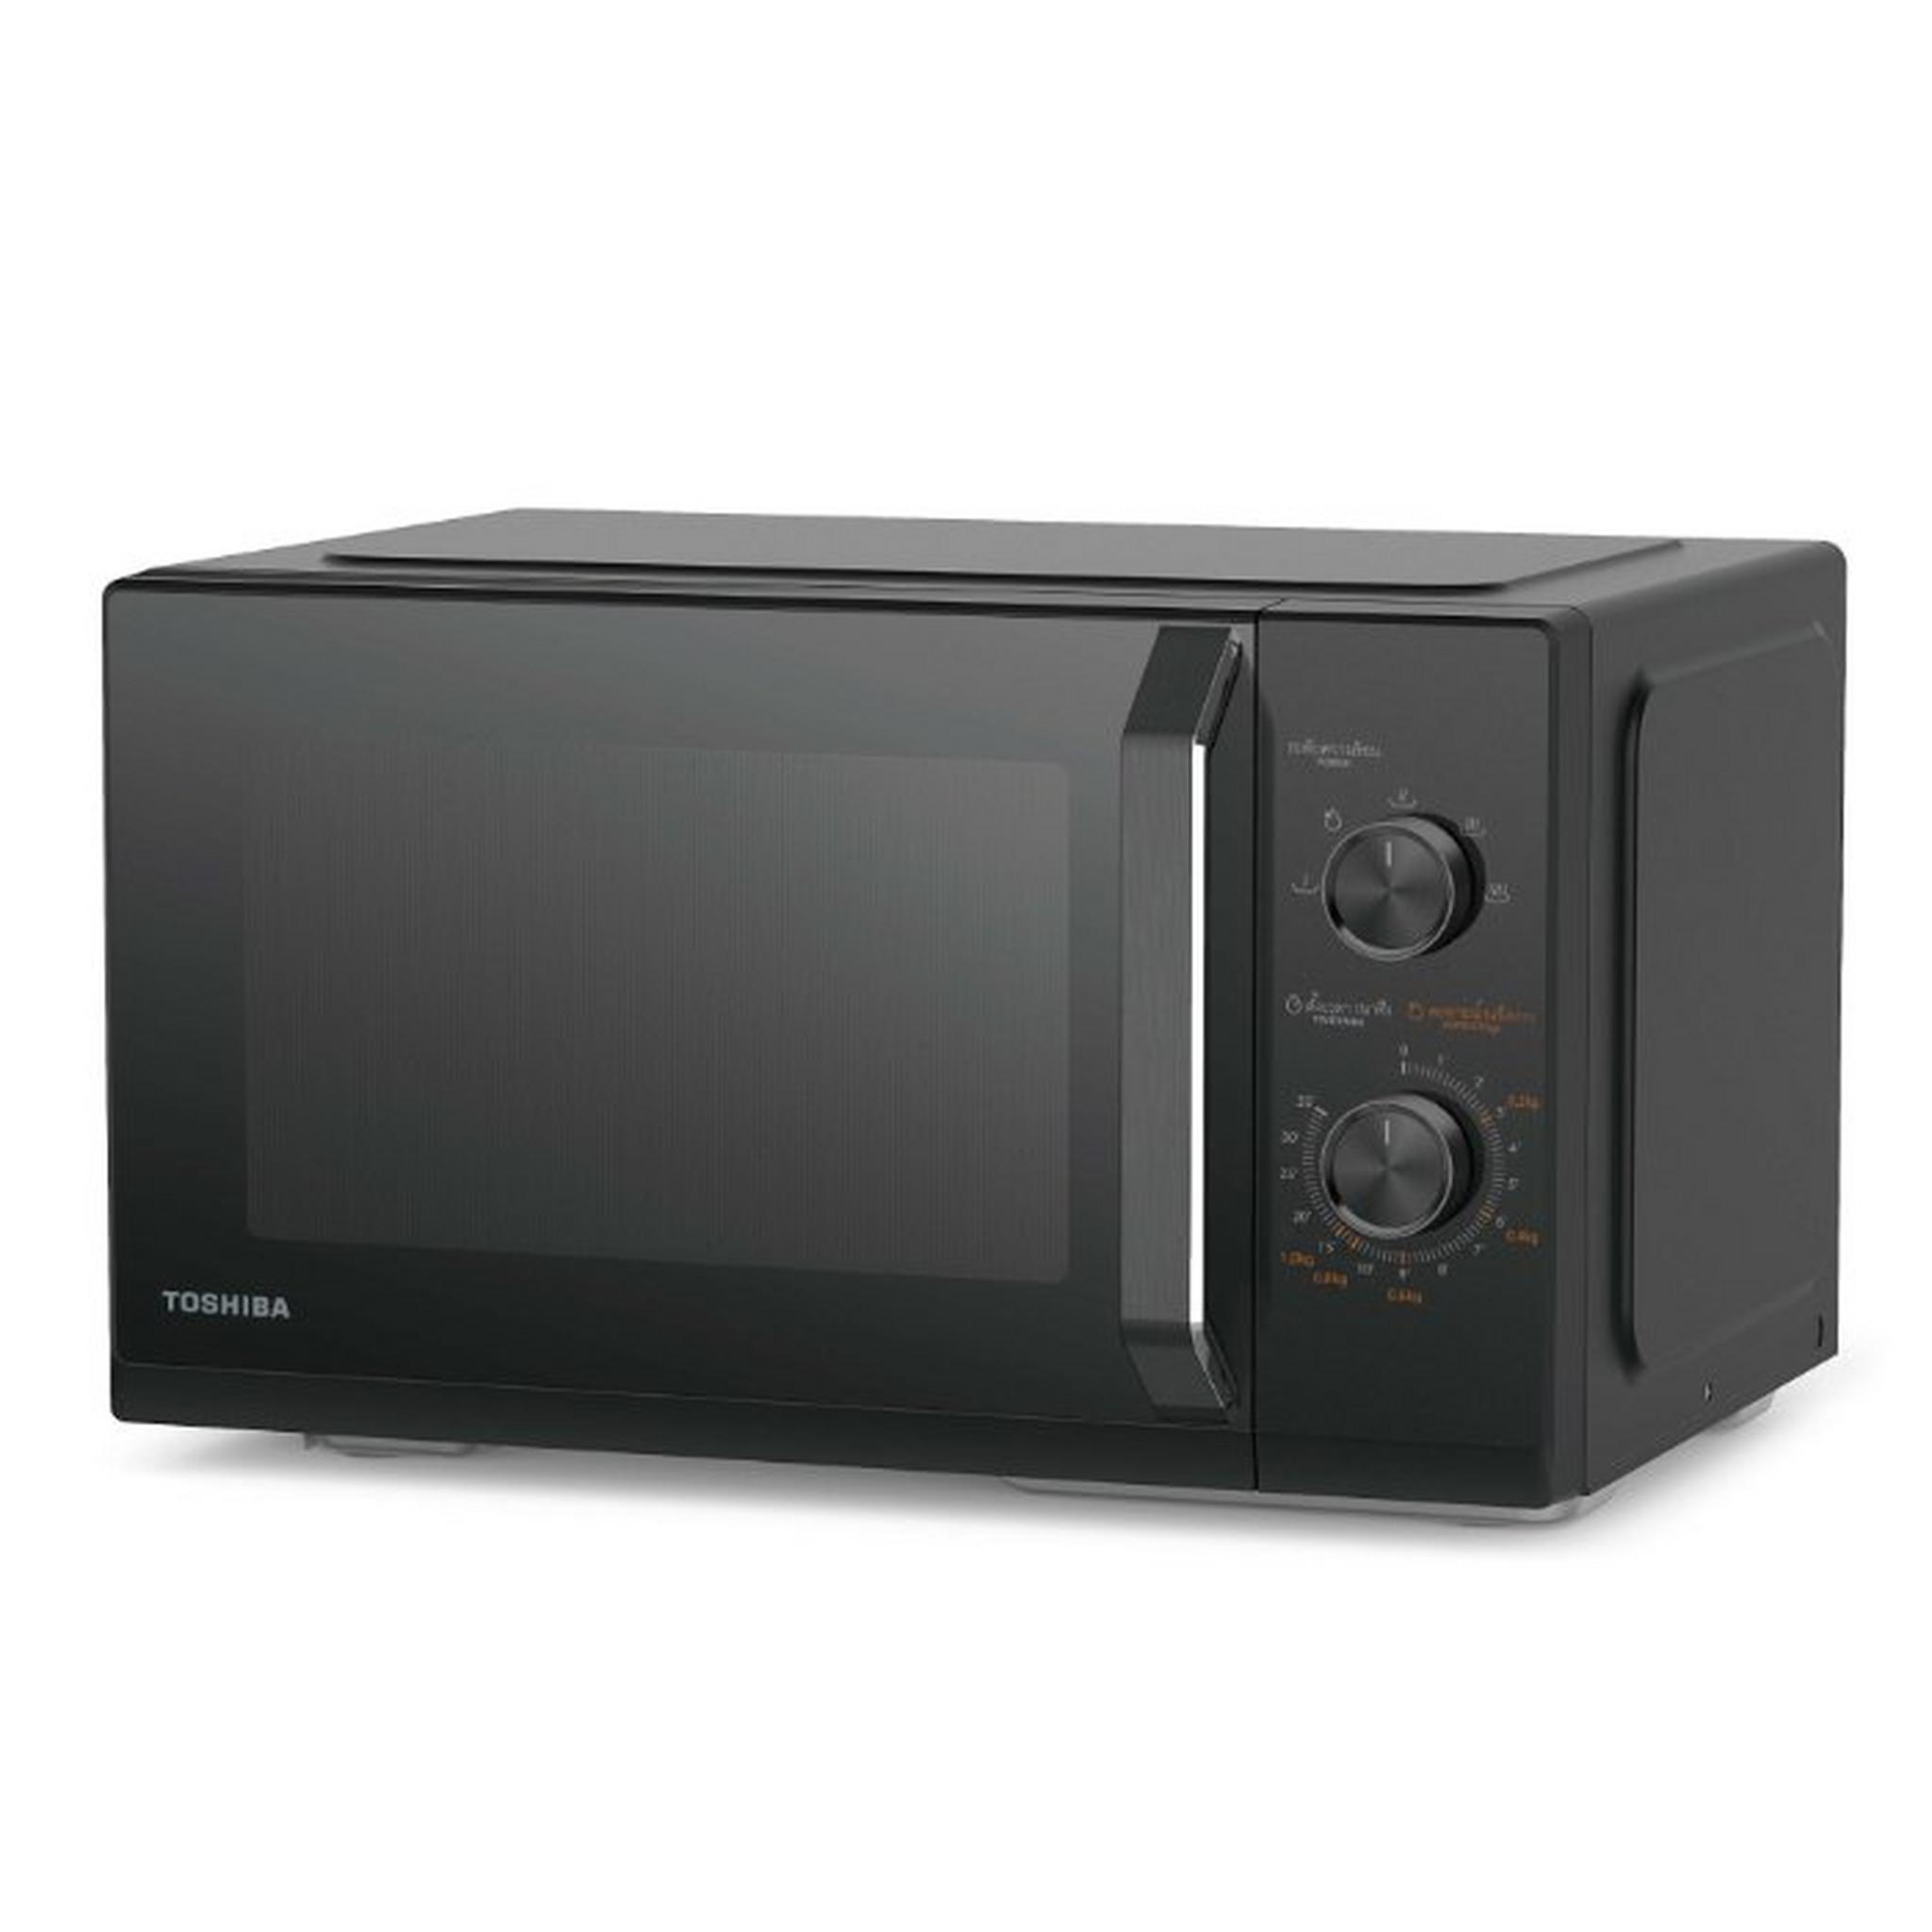 Toshiba Microwave Oven, 800W, 25L, MW3-MM25PE – Black